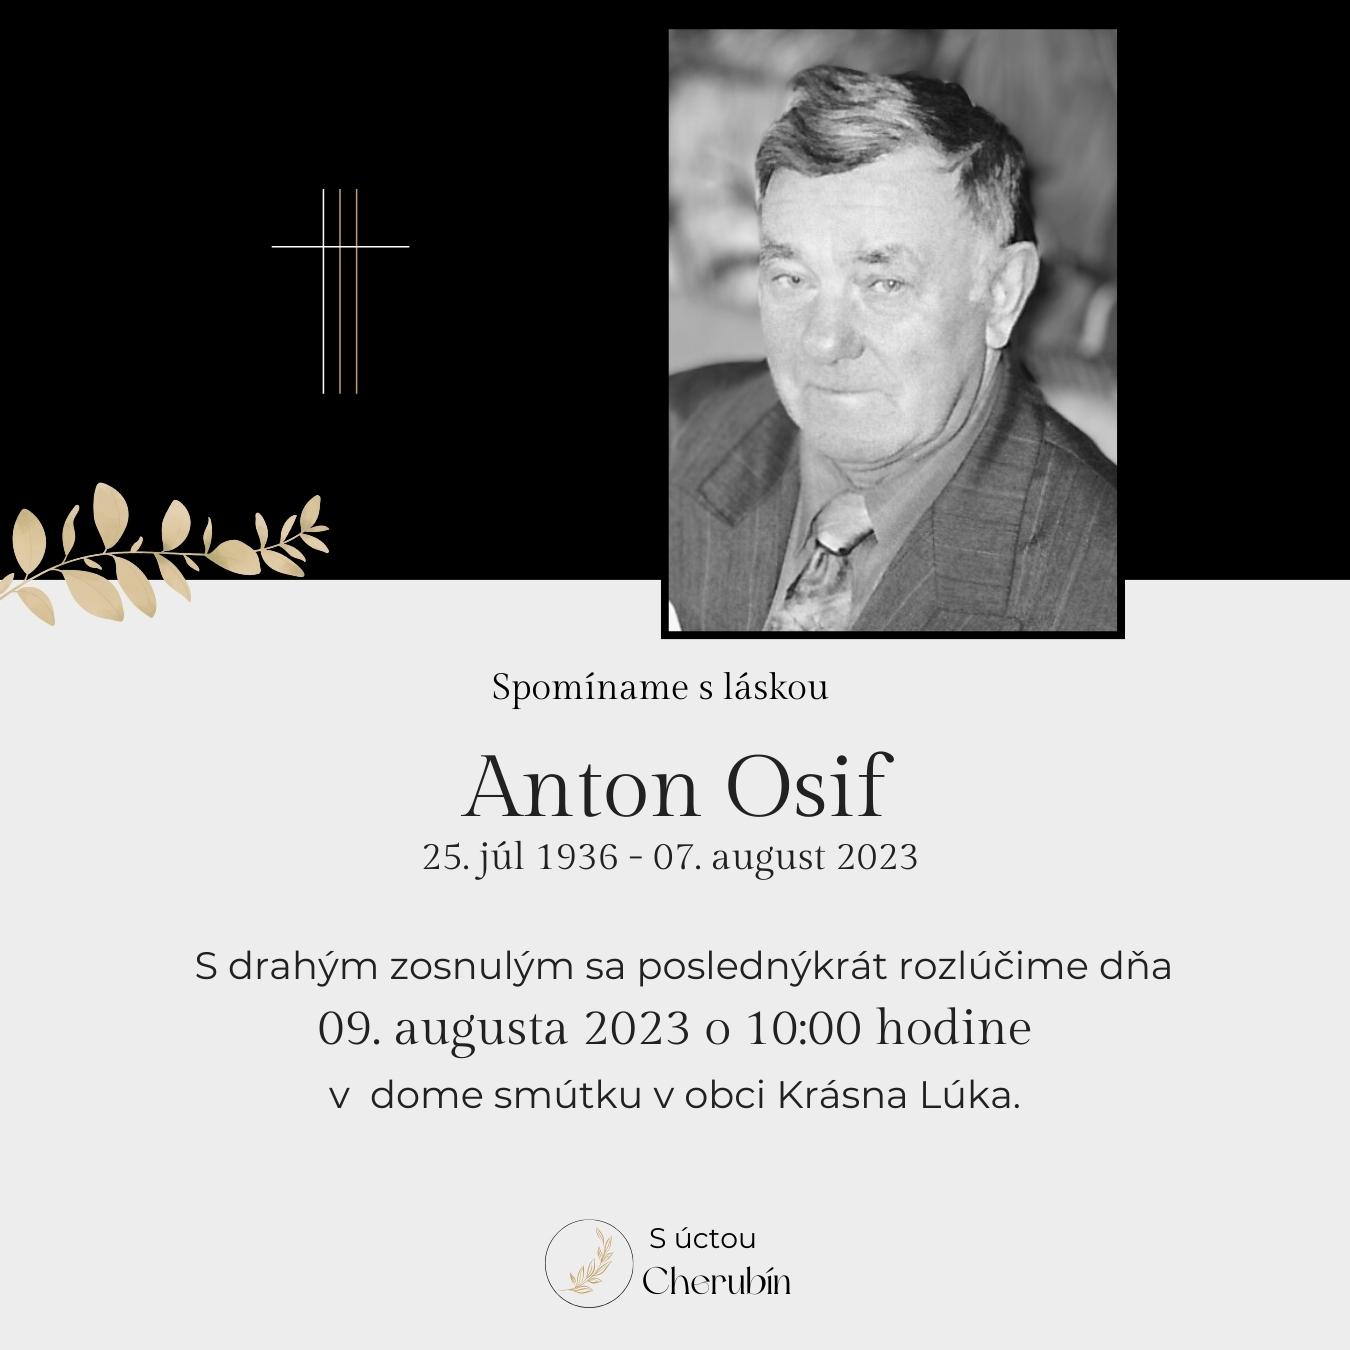 Anton Osif